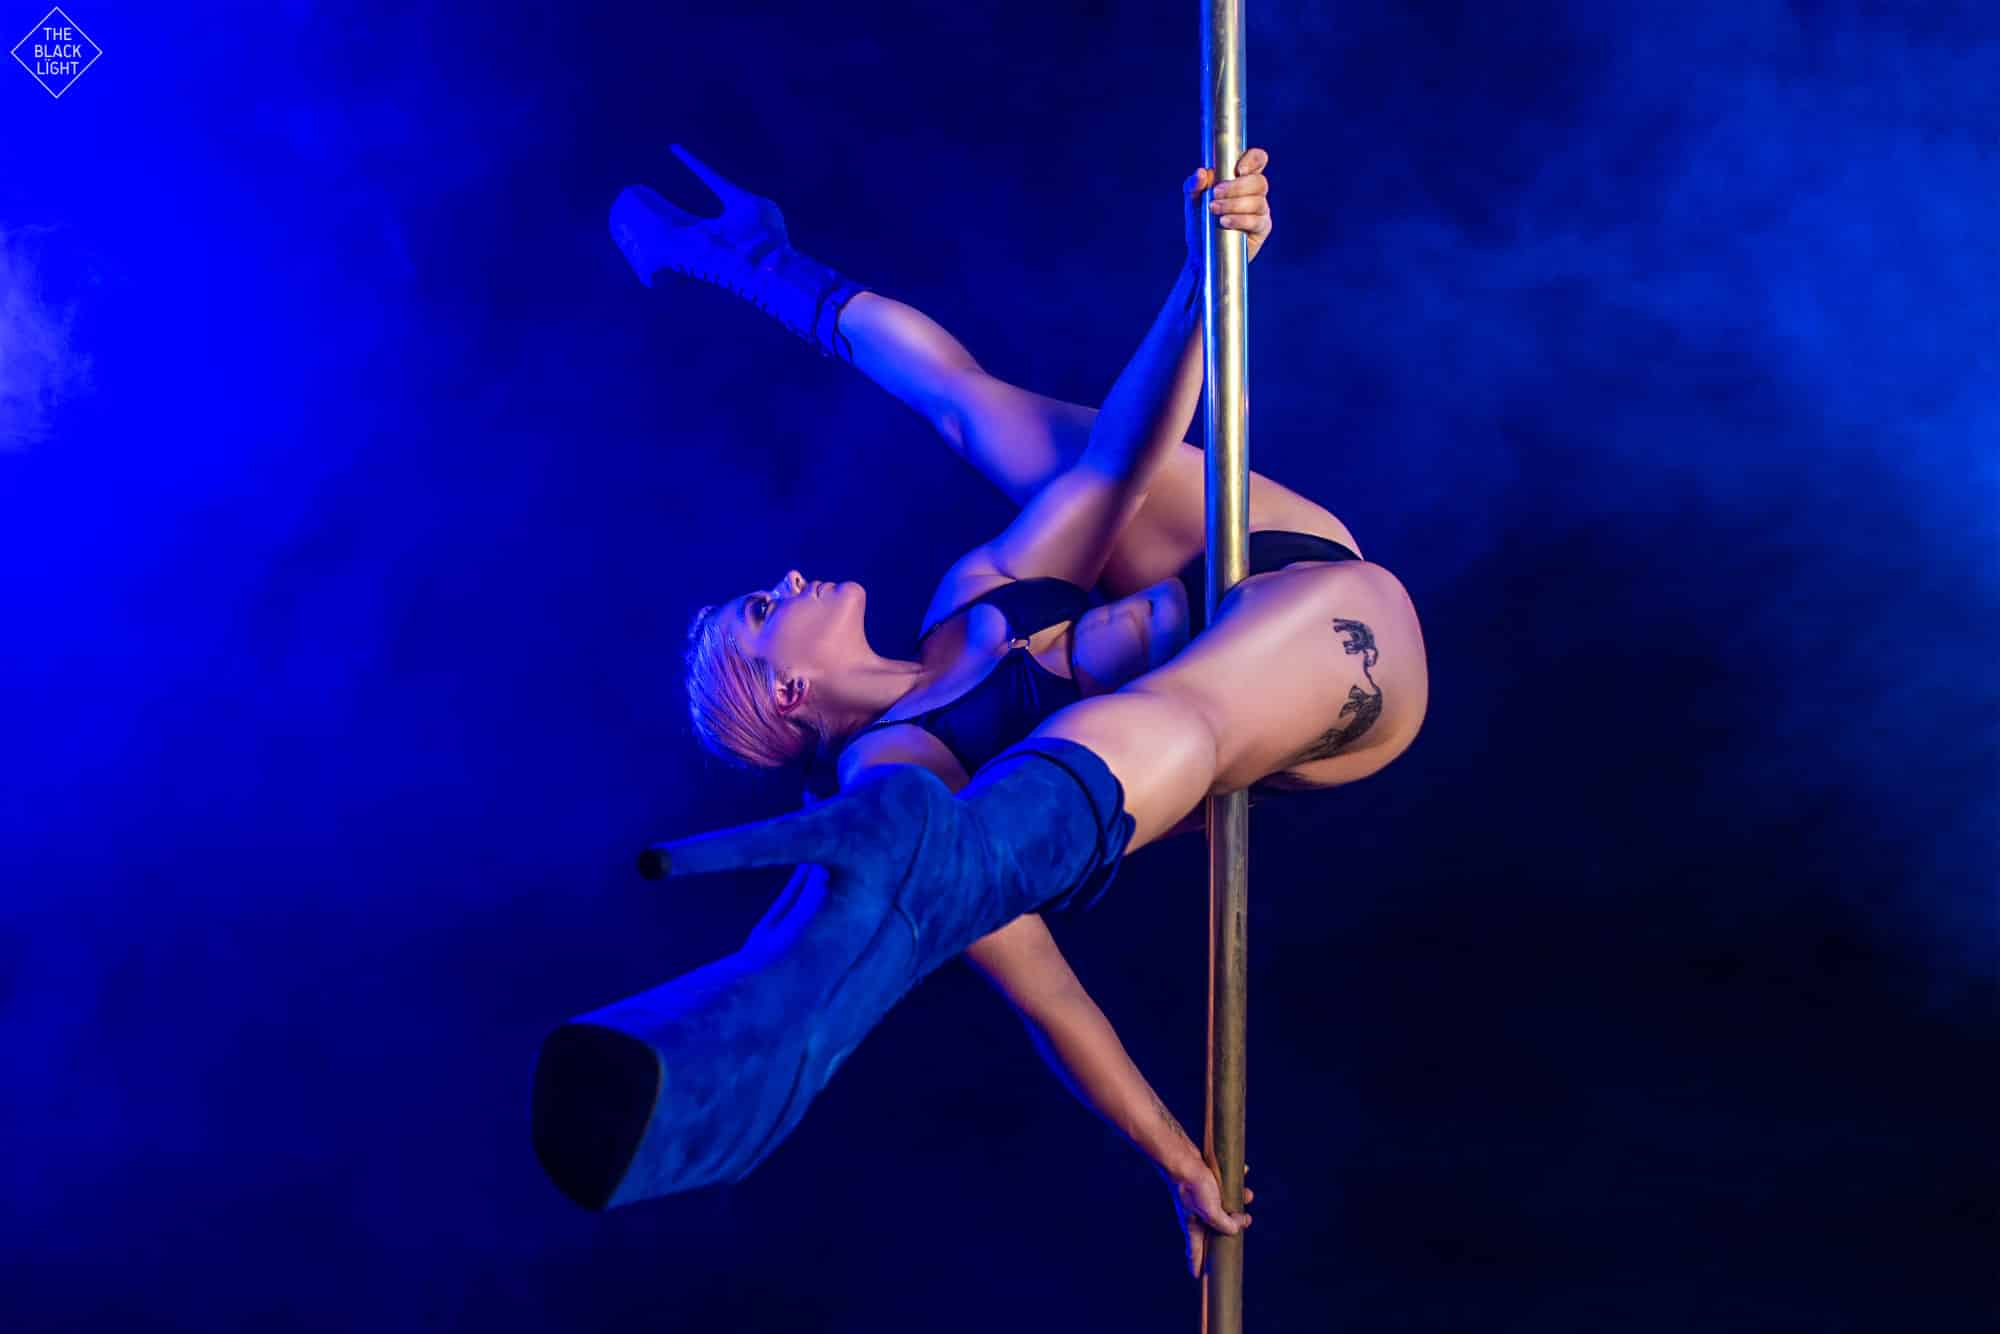 woman on pole in split trick wearing heels under blue lights for photoshoot